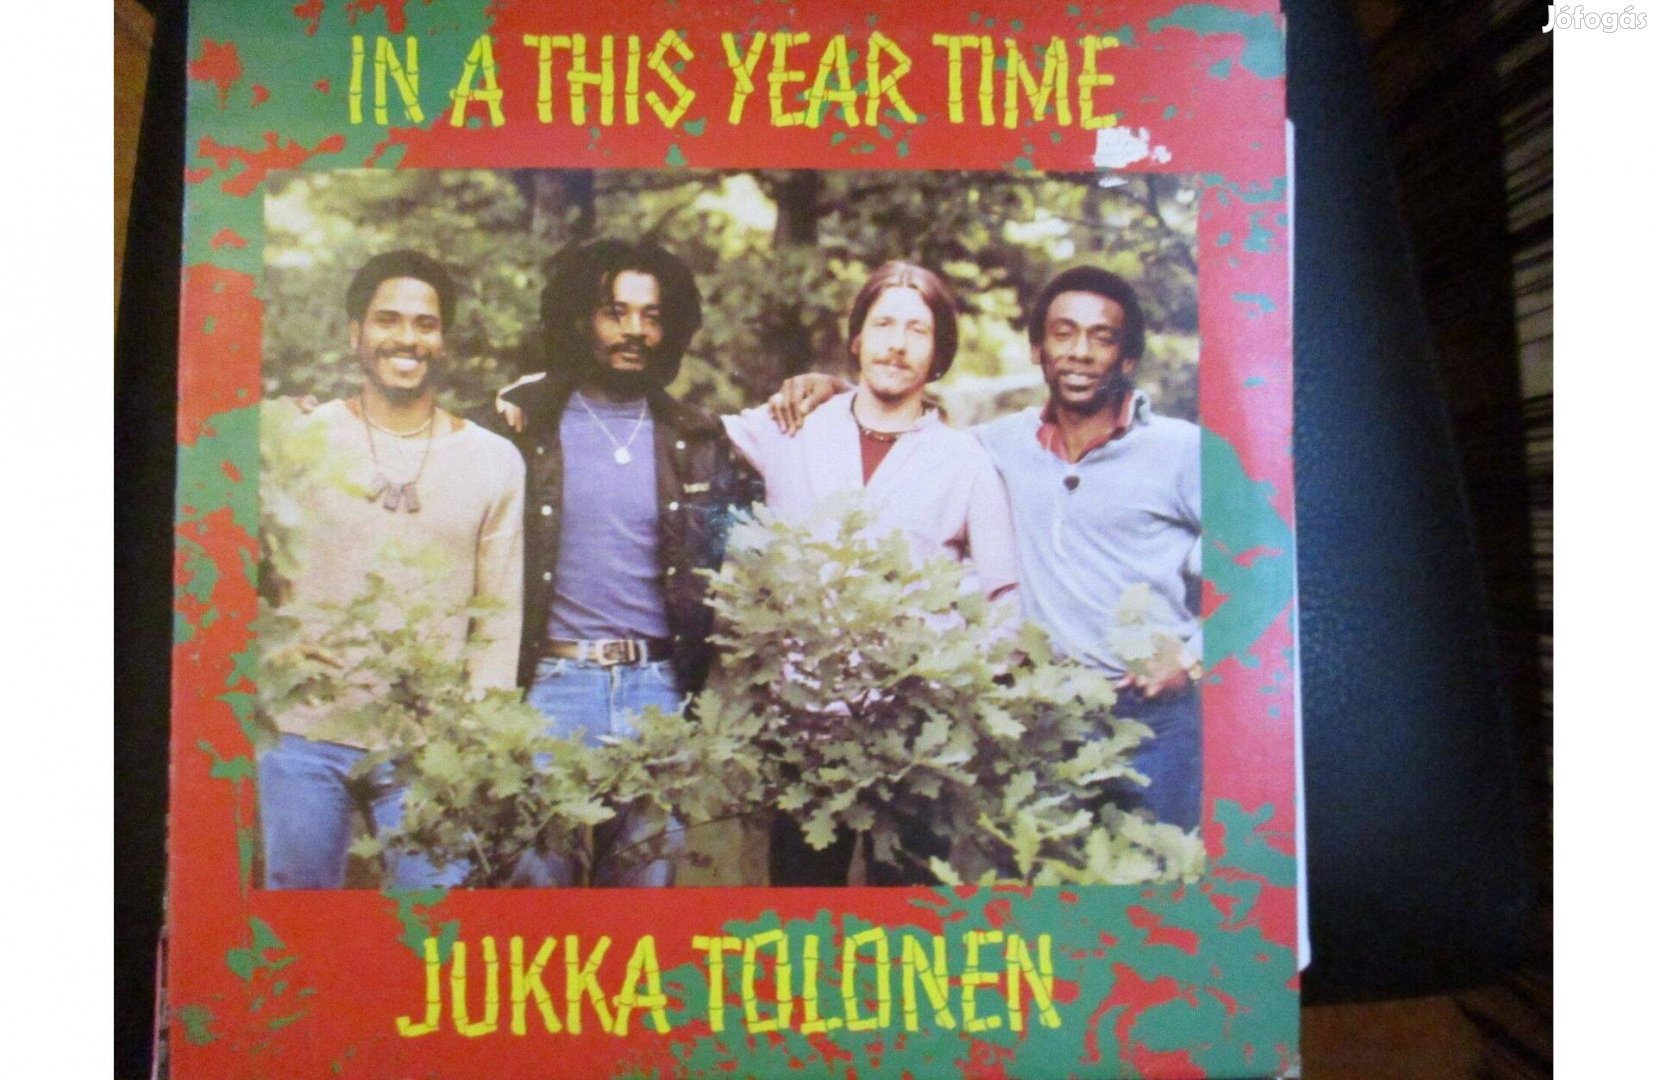 Jukka Tolonen bakelit hanglemez eladó